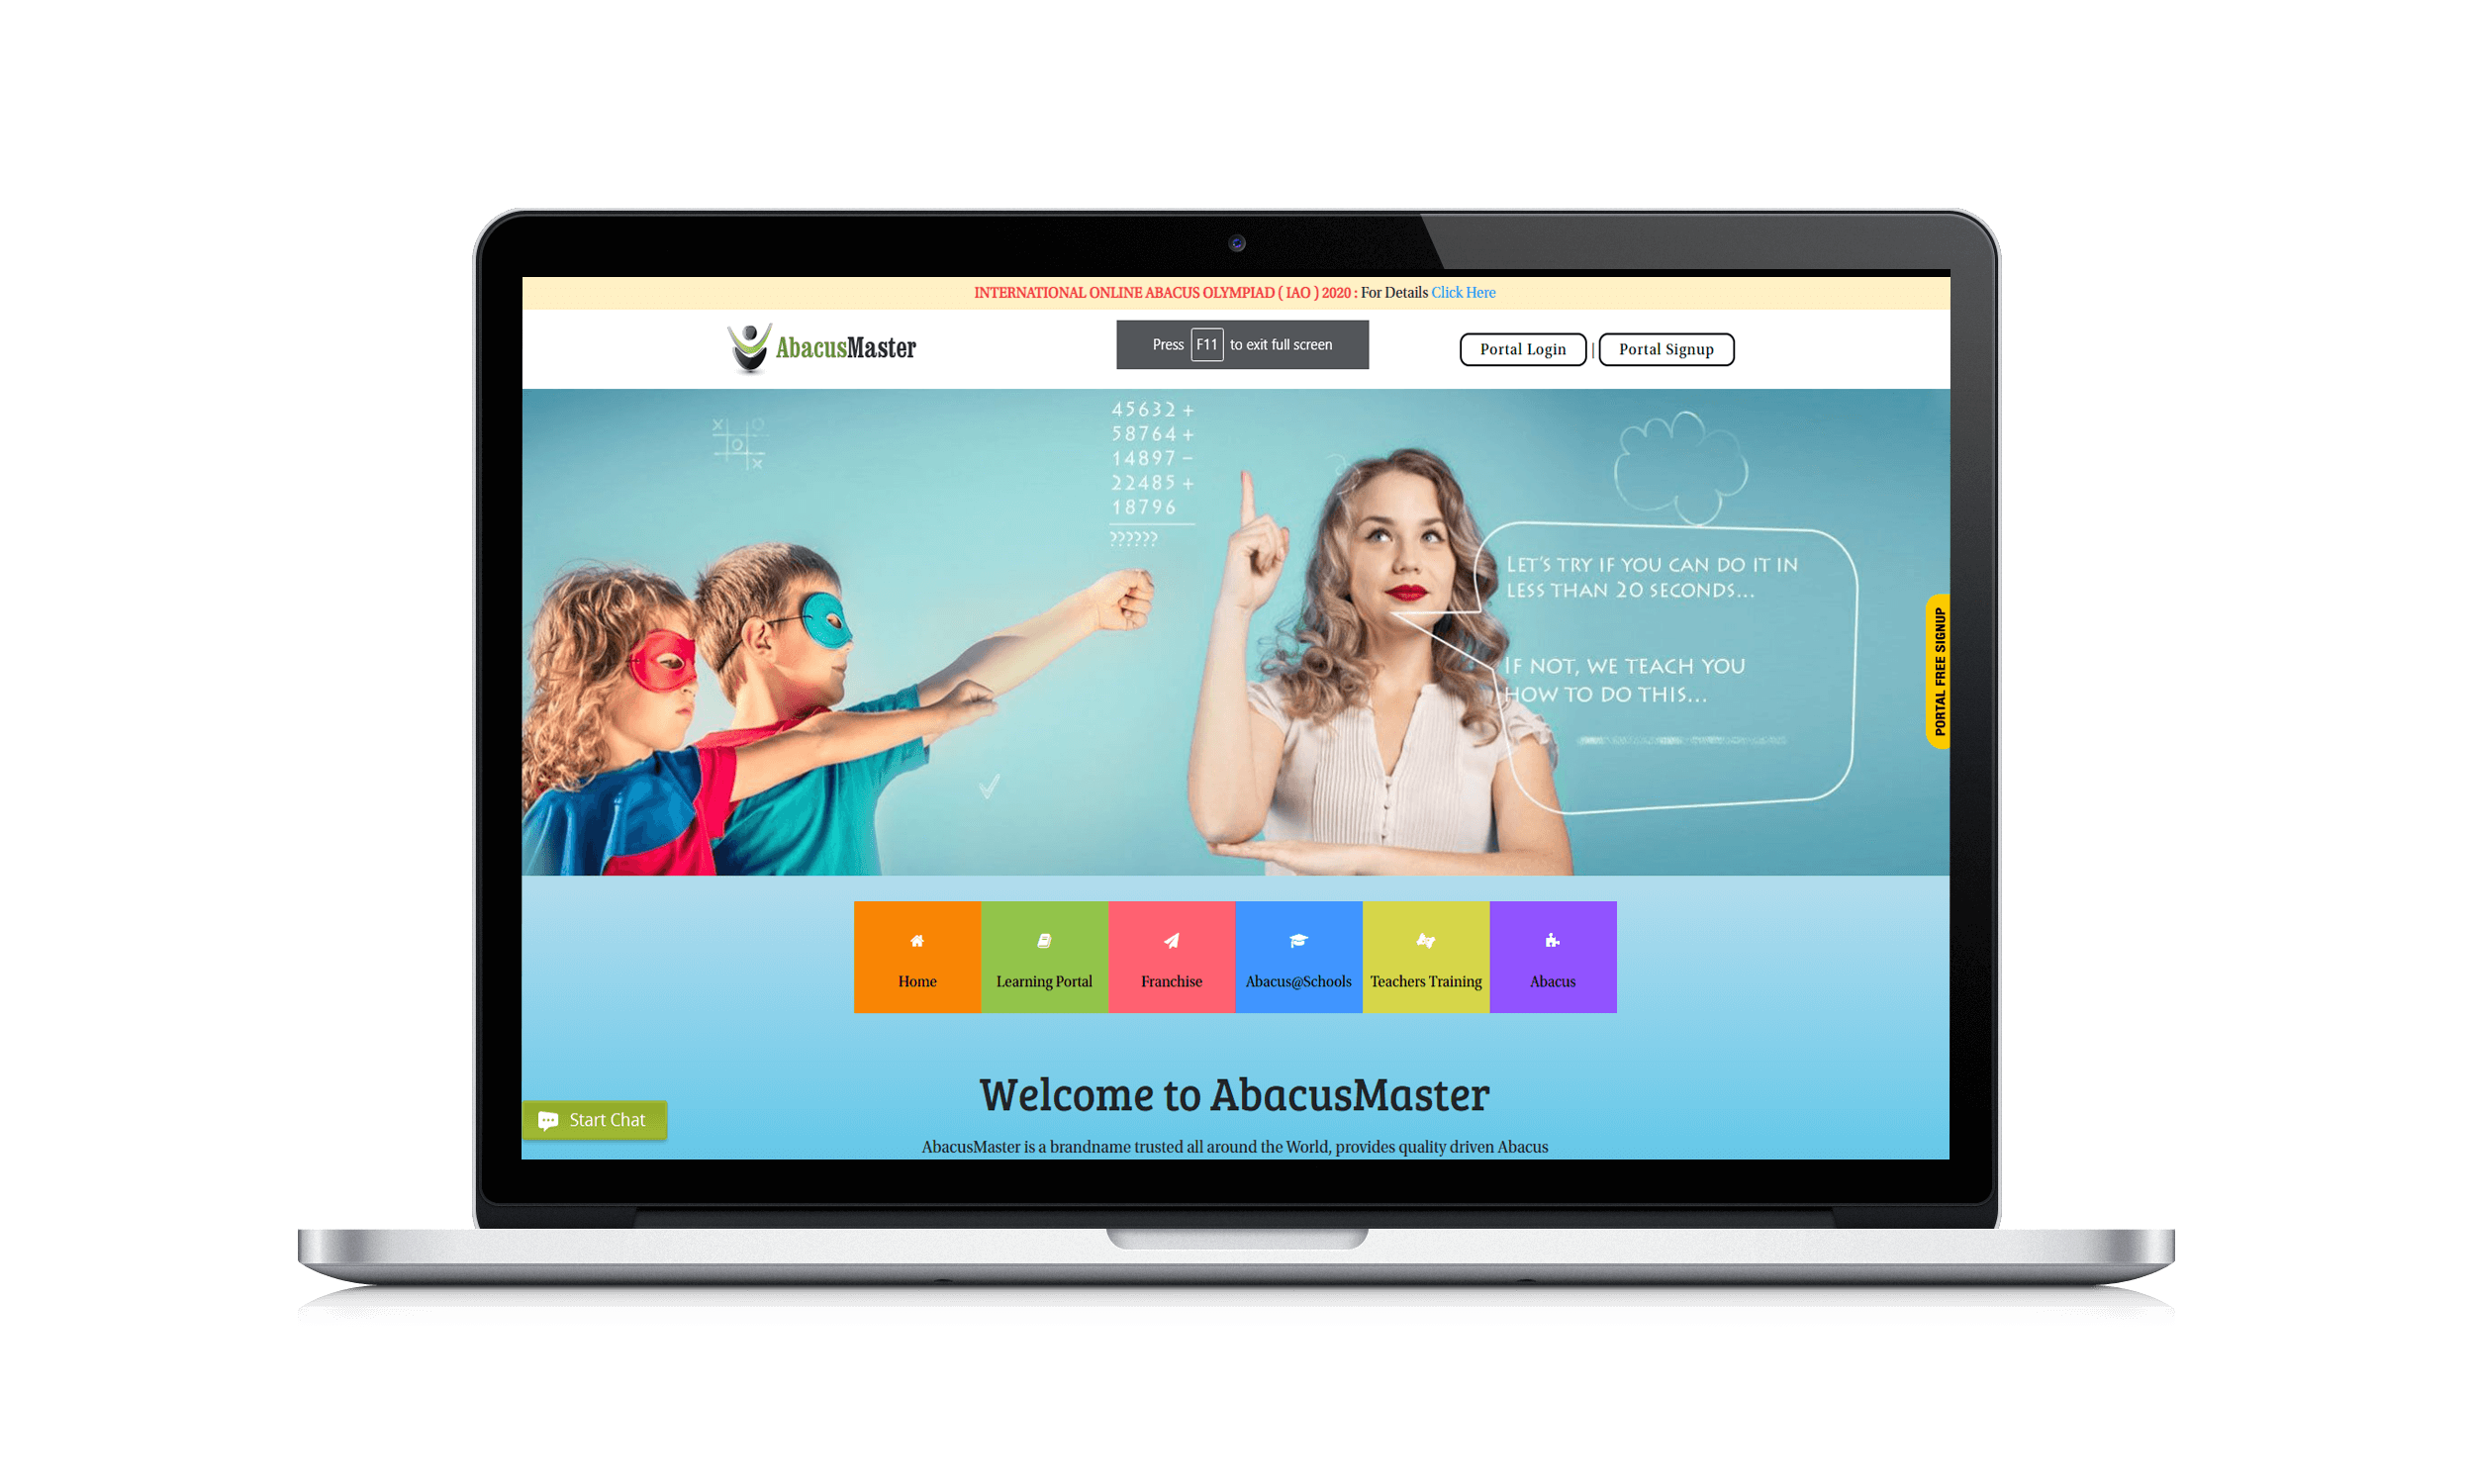 wizycom nurure abacusmaster online learning app for kids